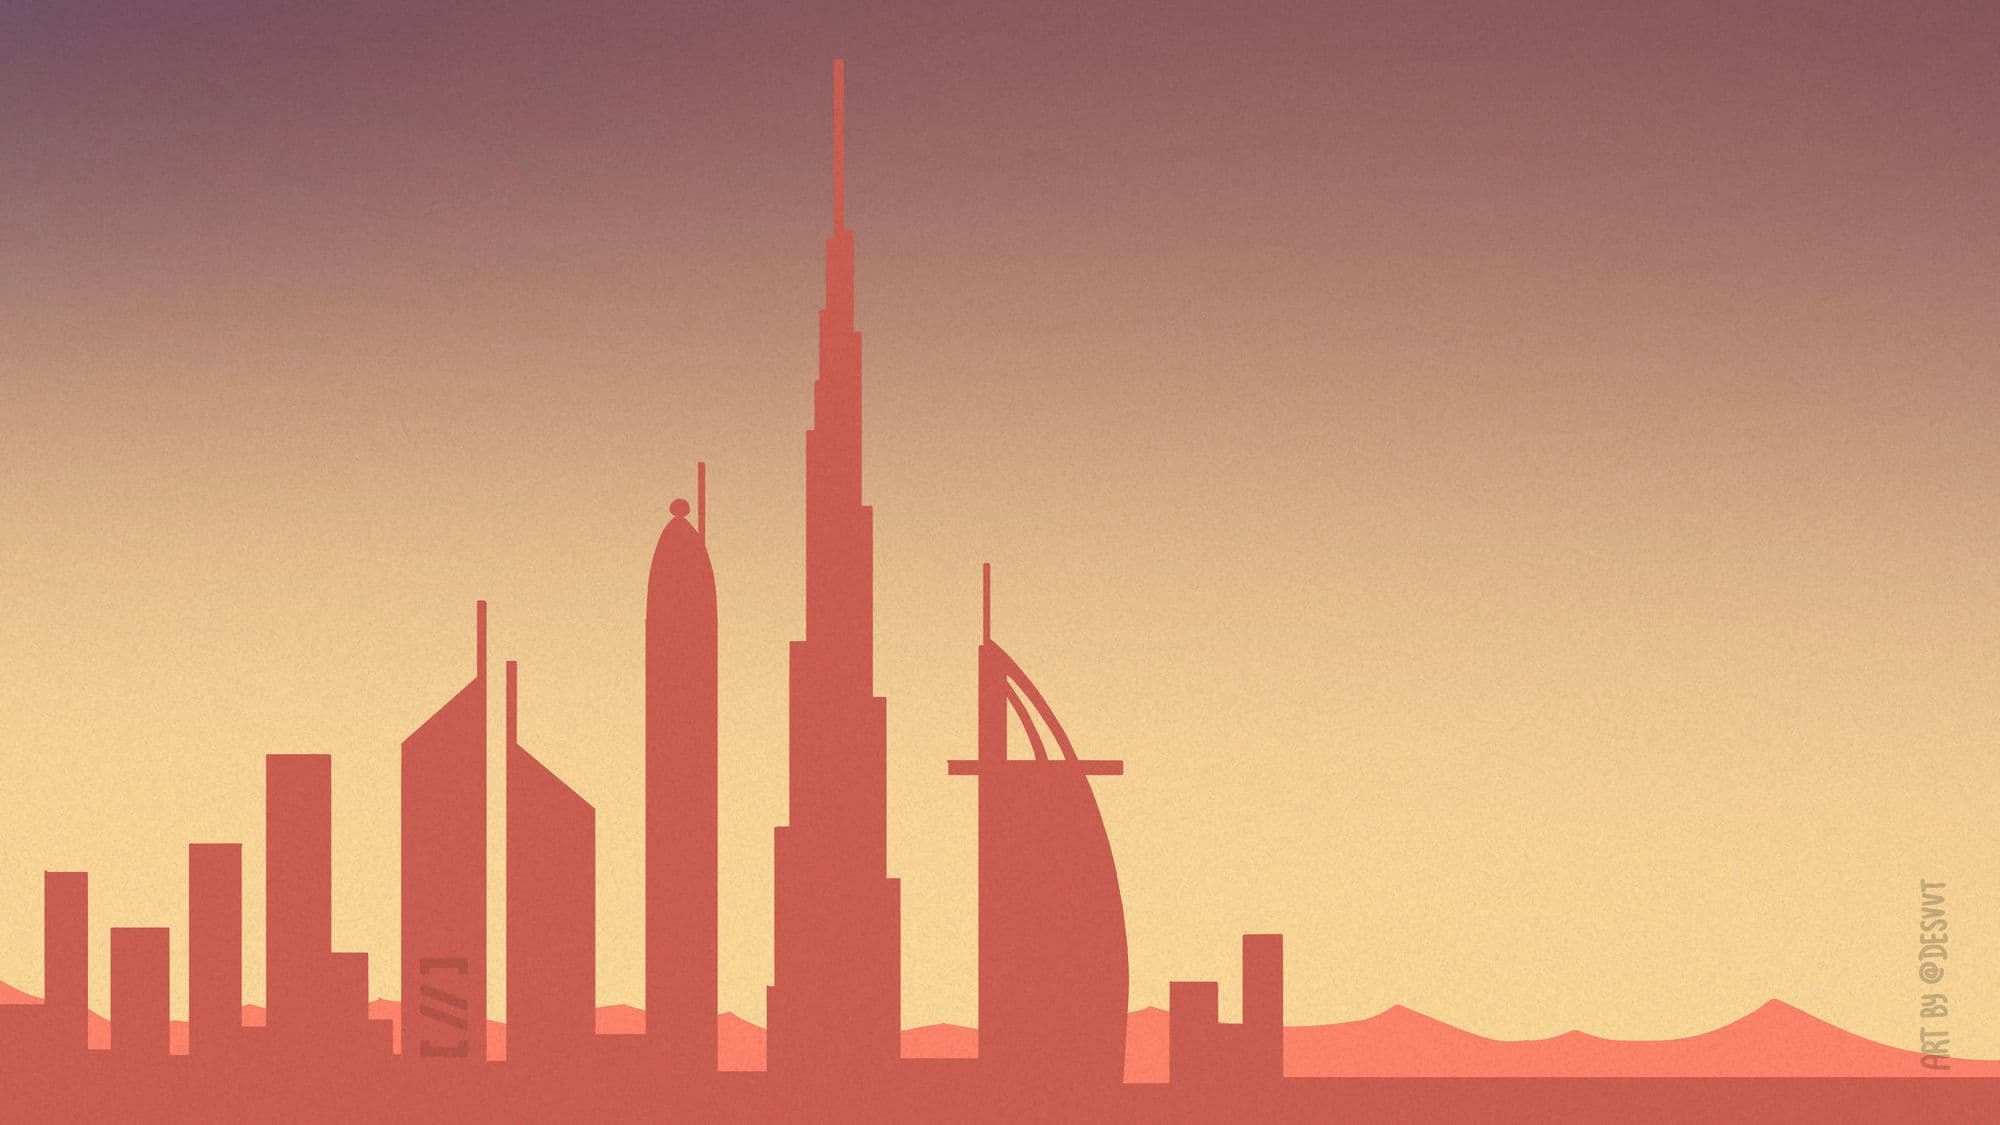 Dubai to Host FinTech Summit Next Year